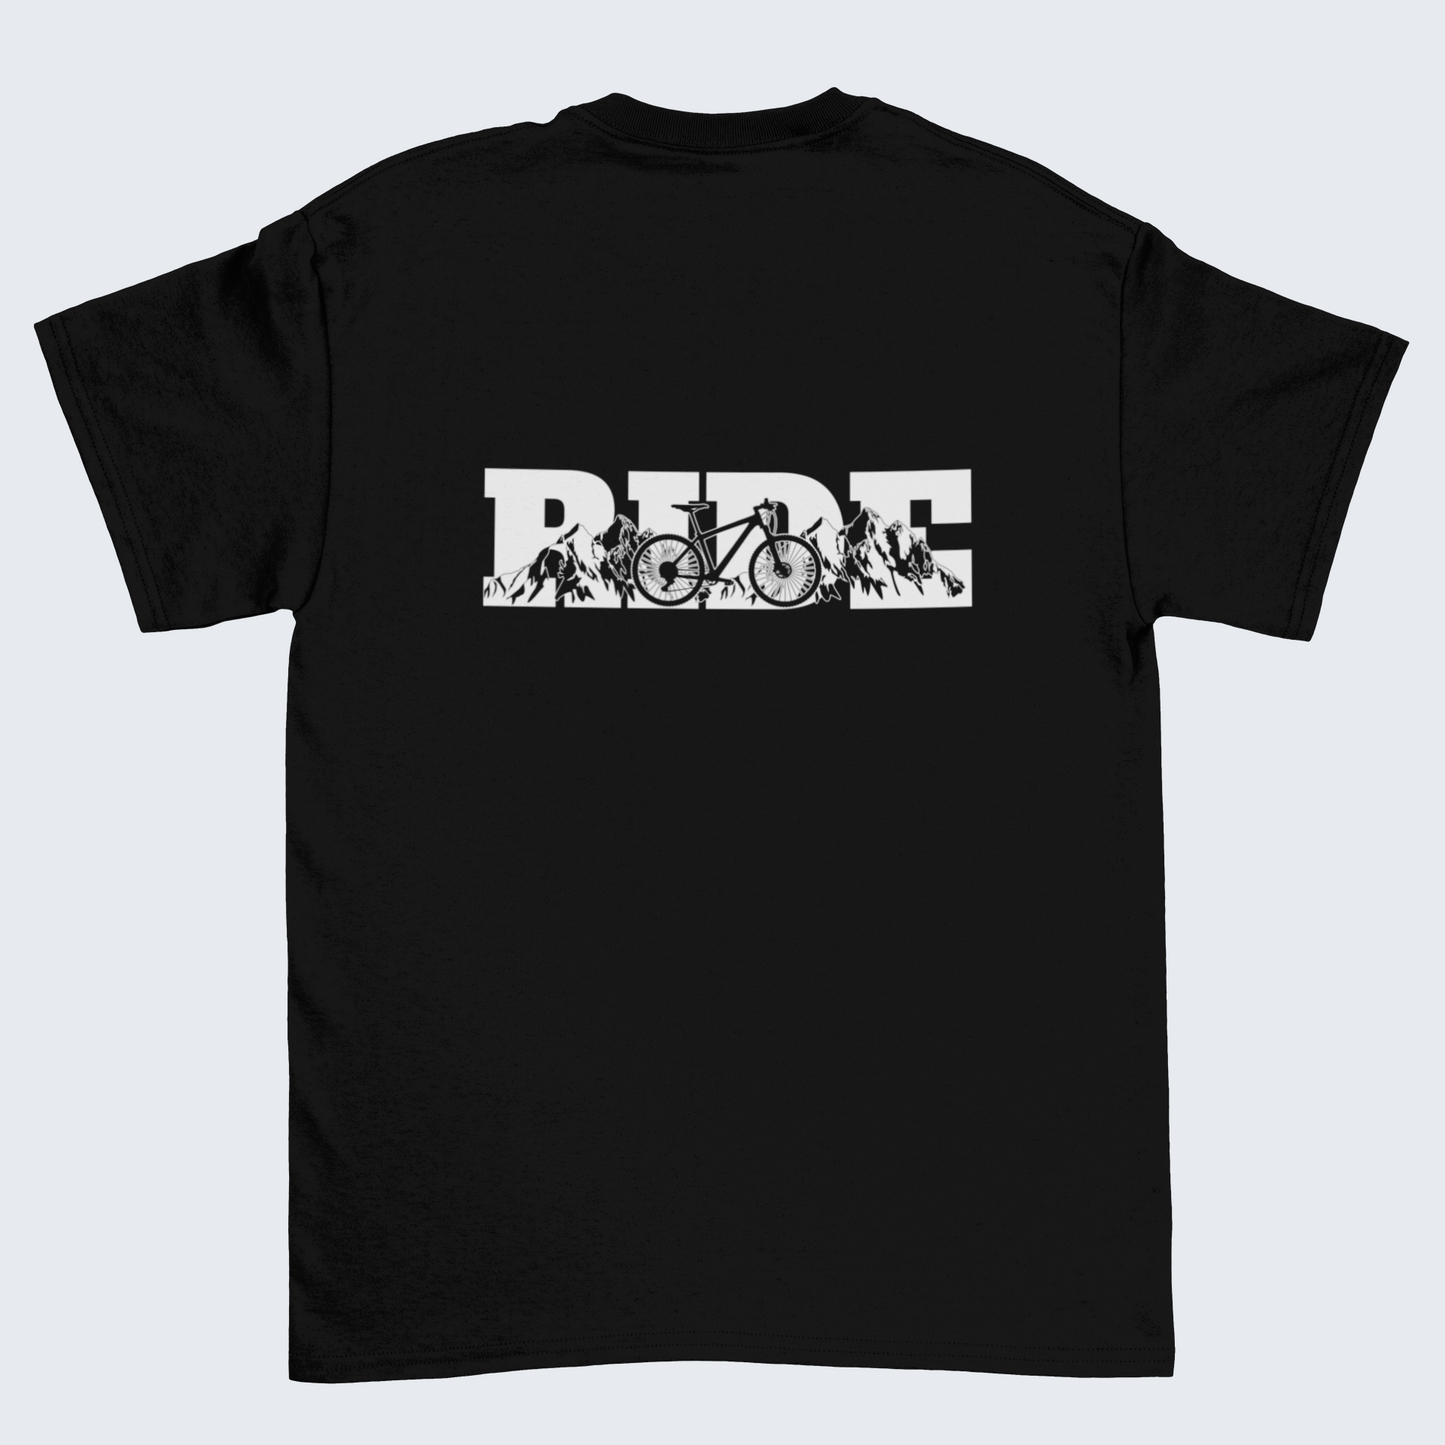 Ride T-Shirt